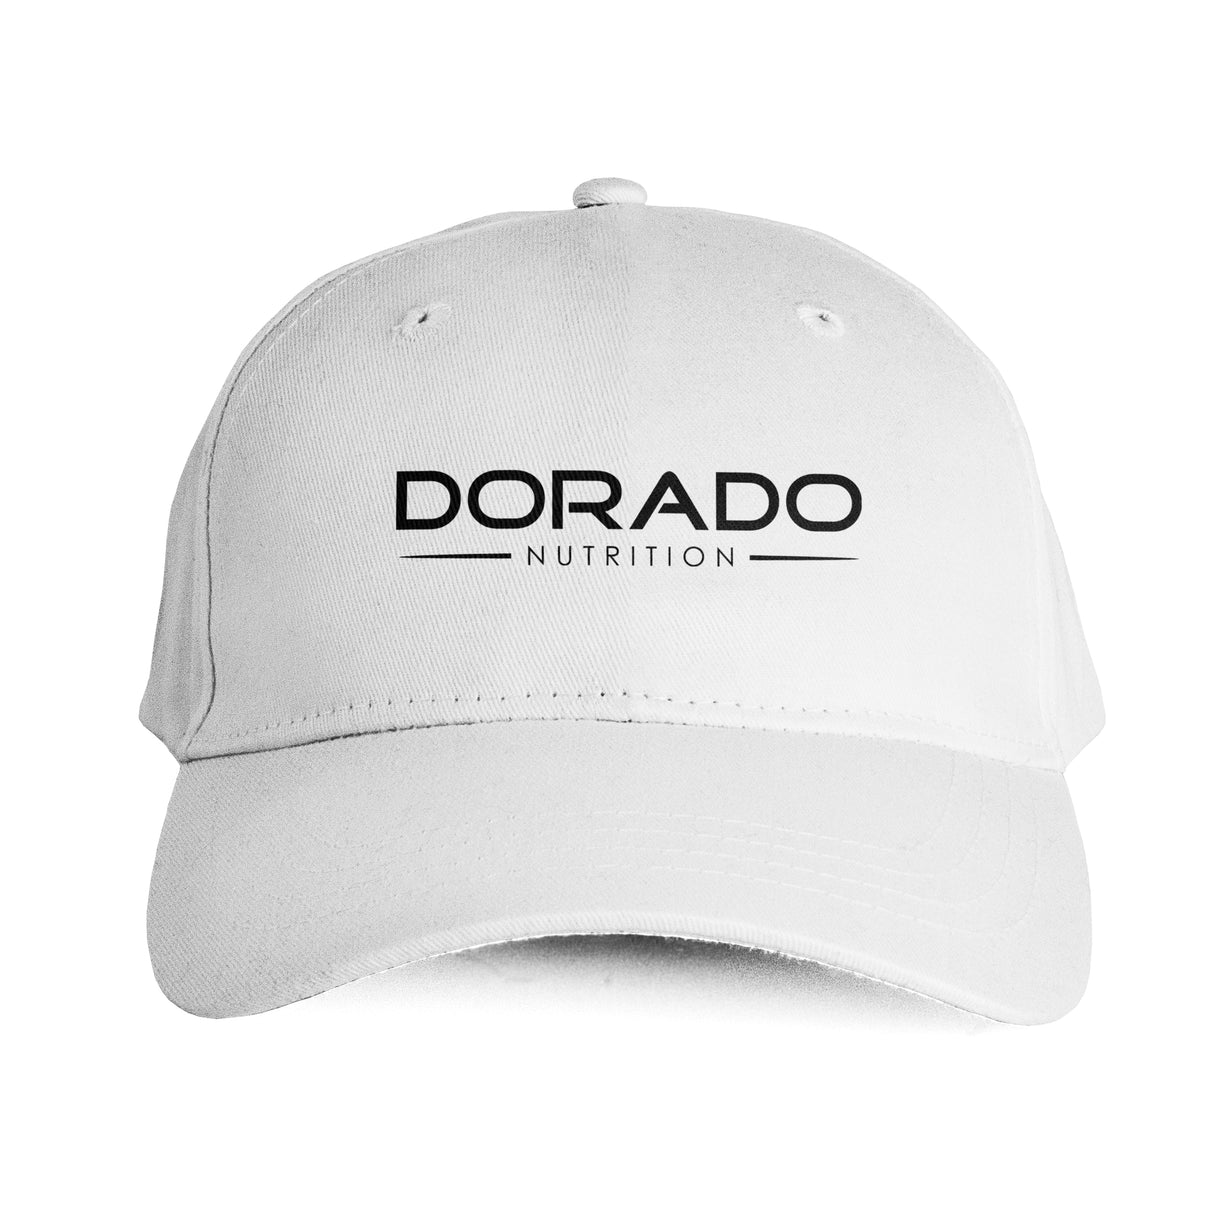 Dorado Nutrition Hat - White